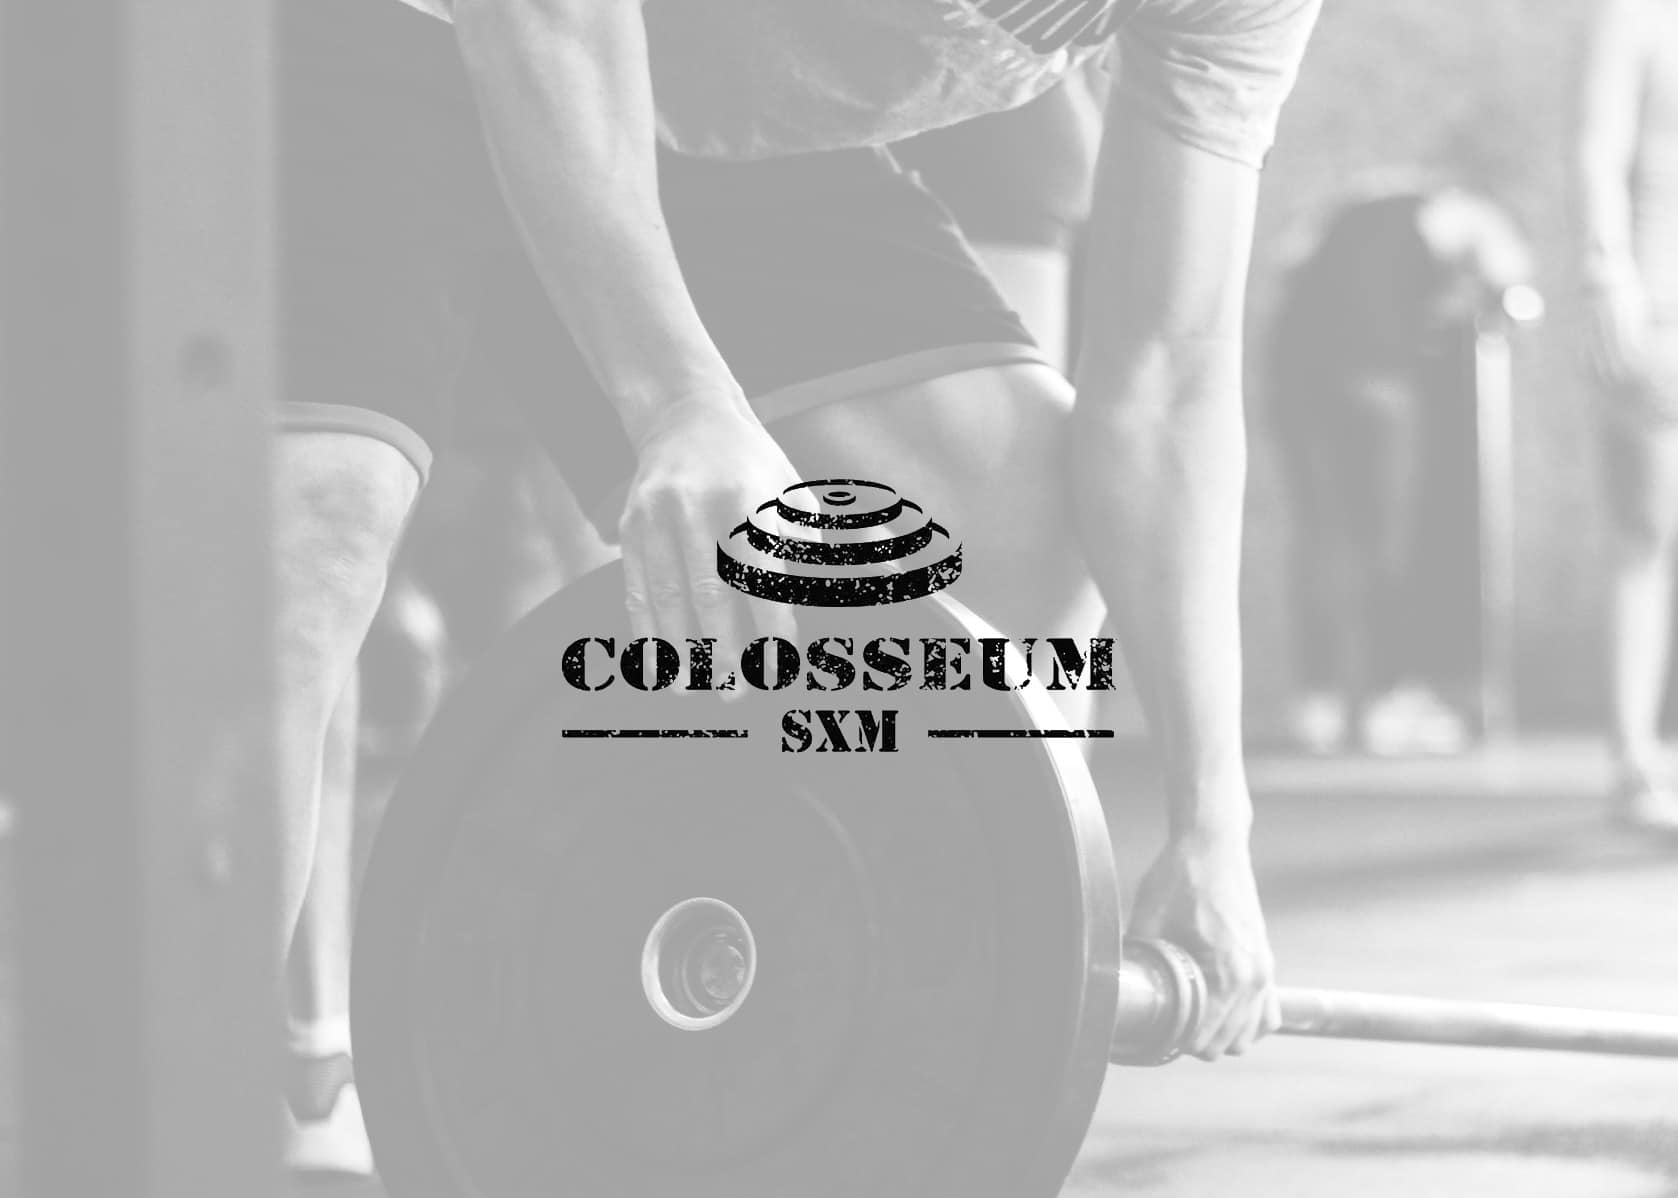 colosseum, crossfire branding, crossfit, gym branding, brand identity